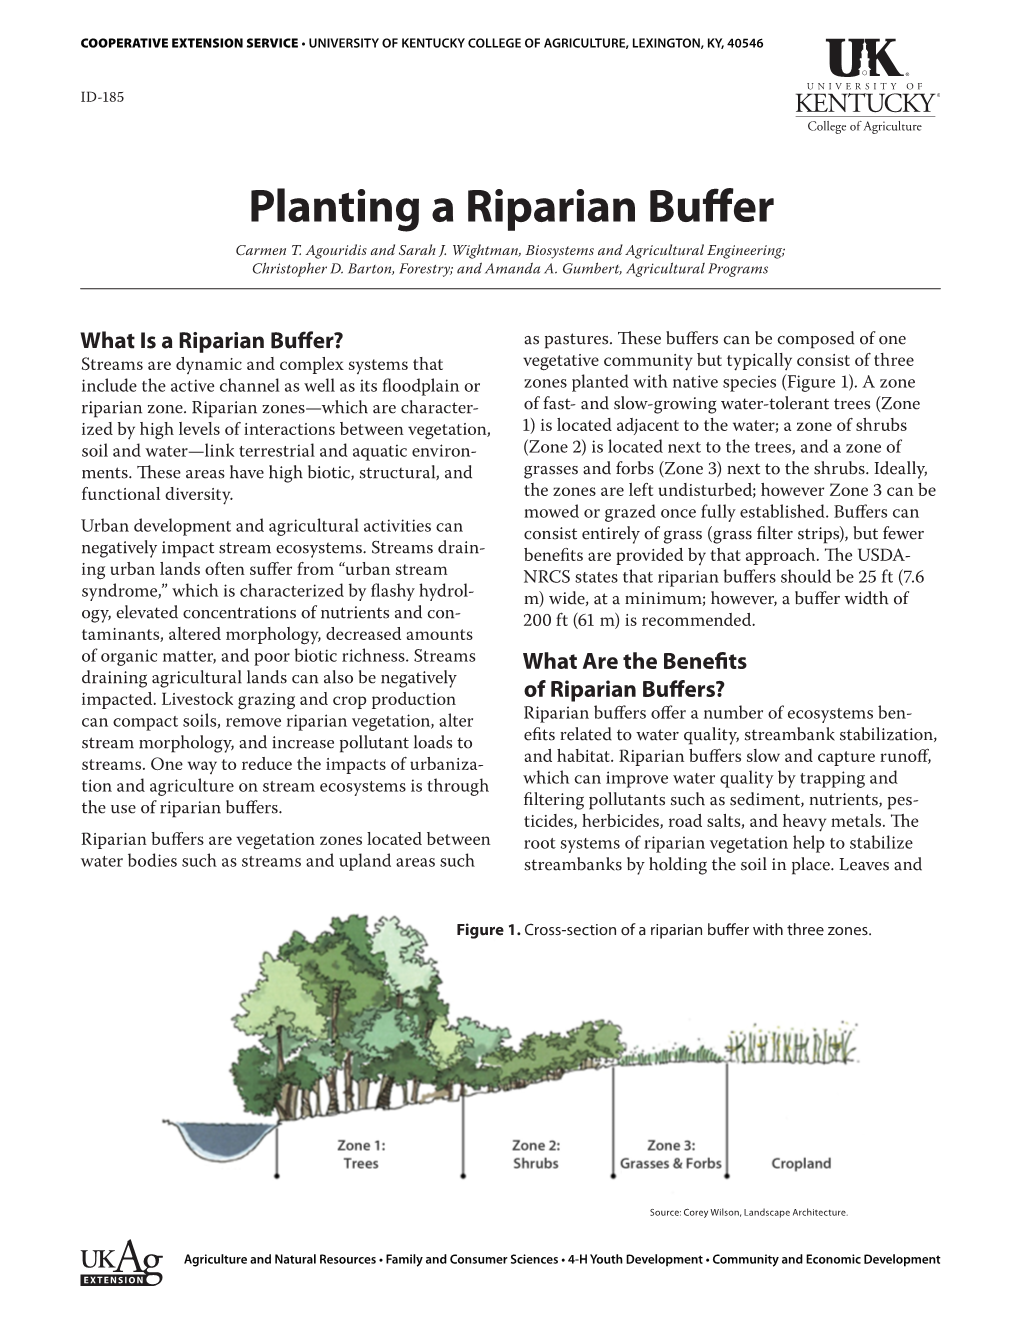 ID-185: Planting a Riparian Buffer